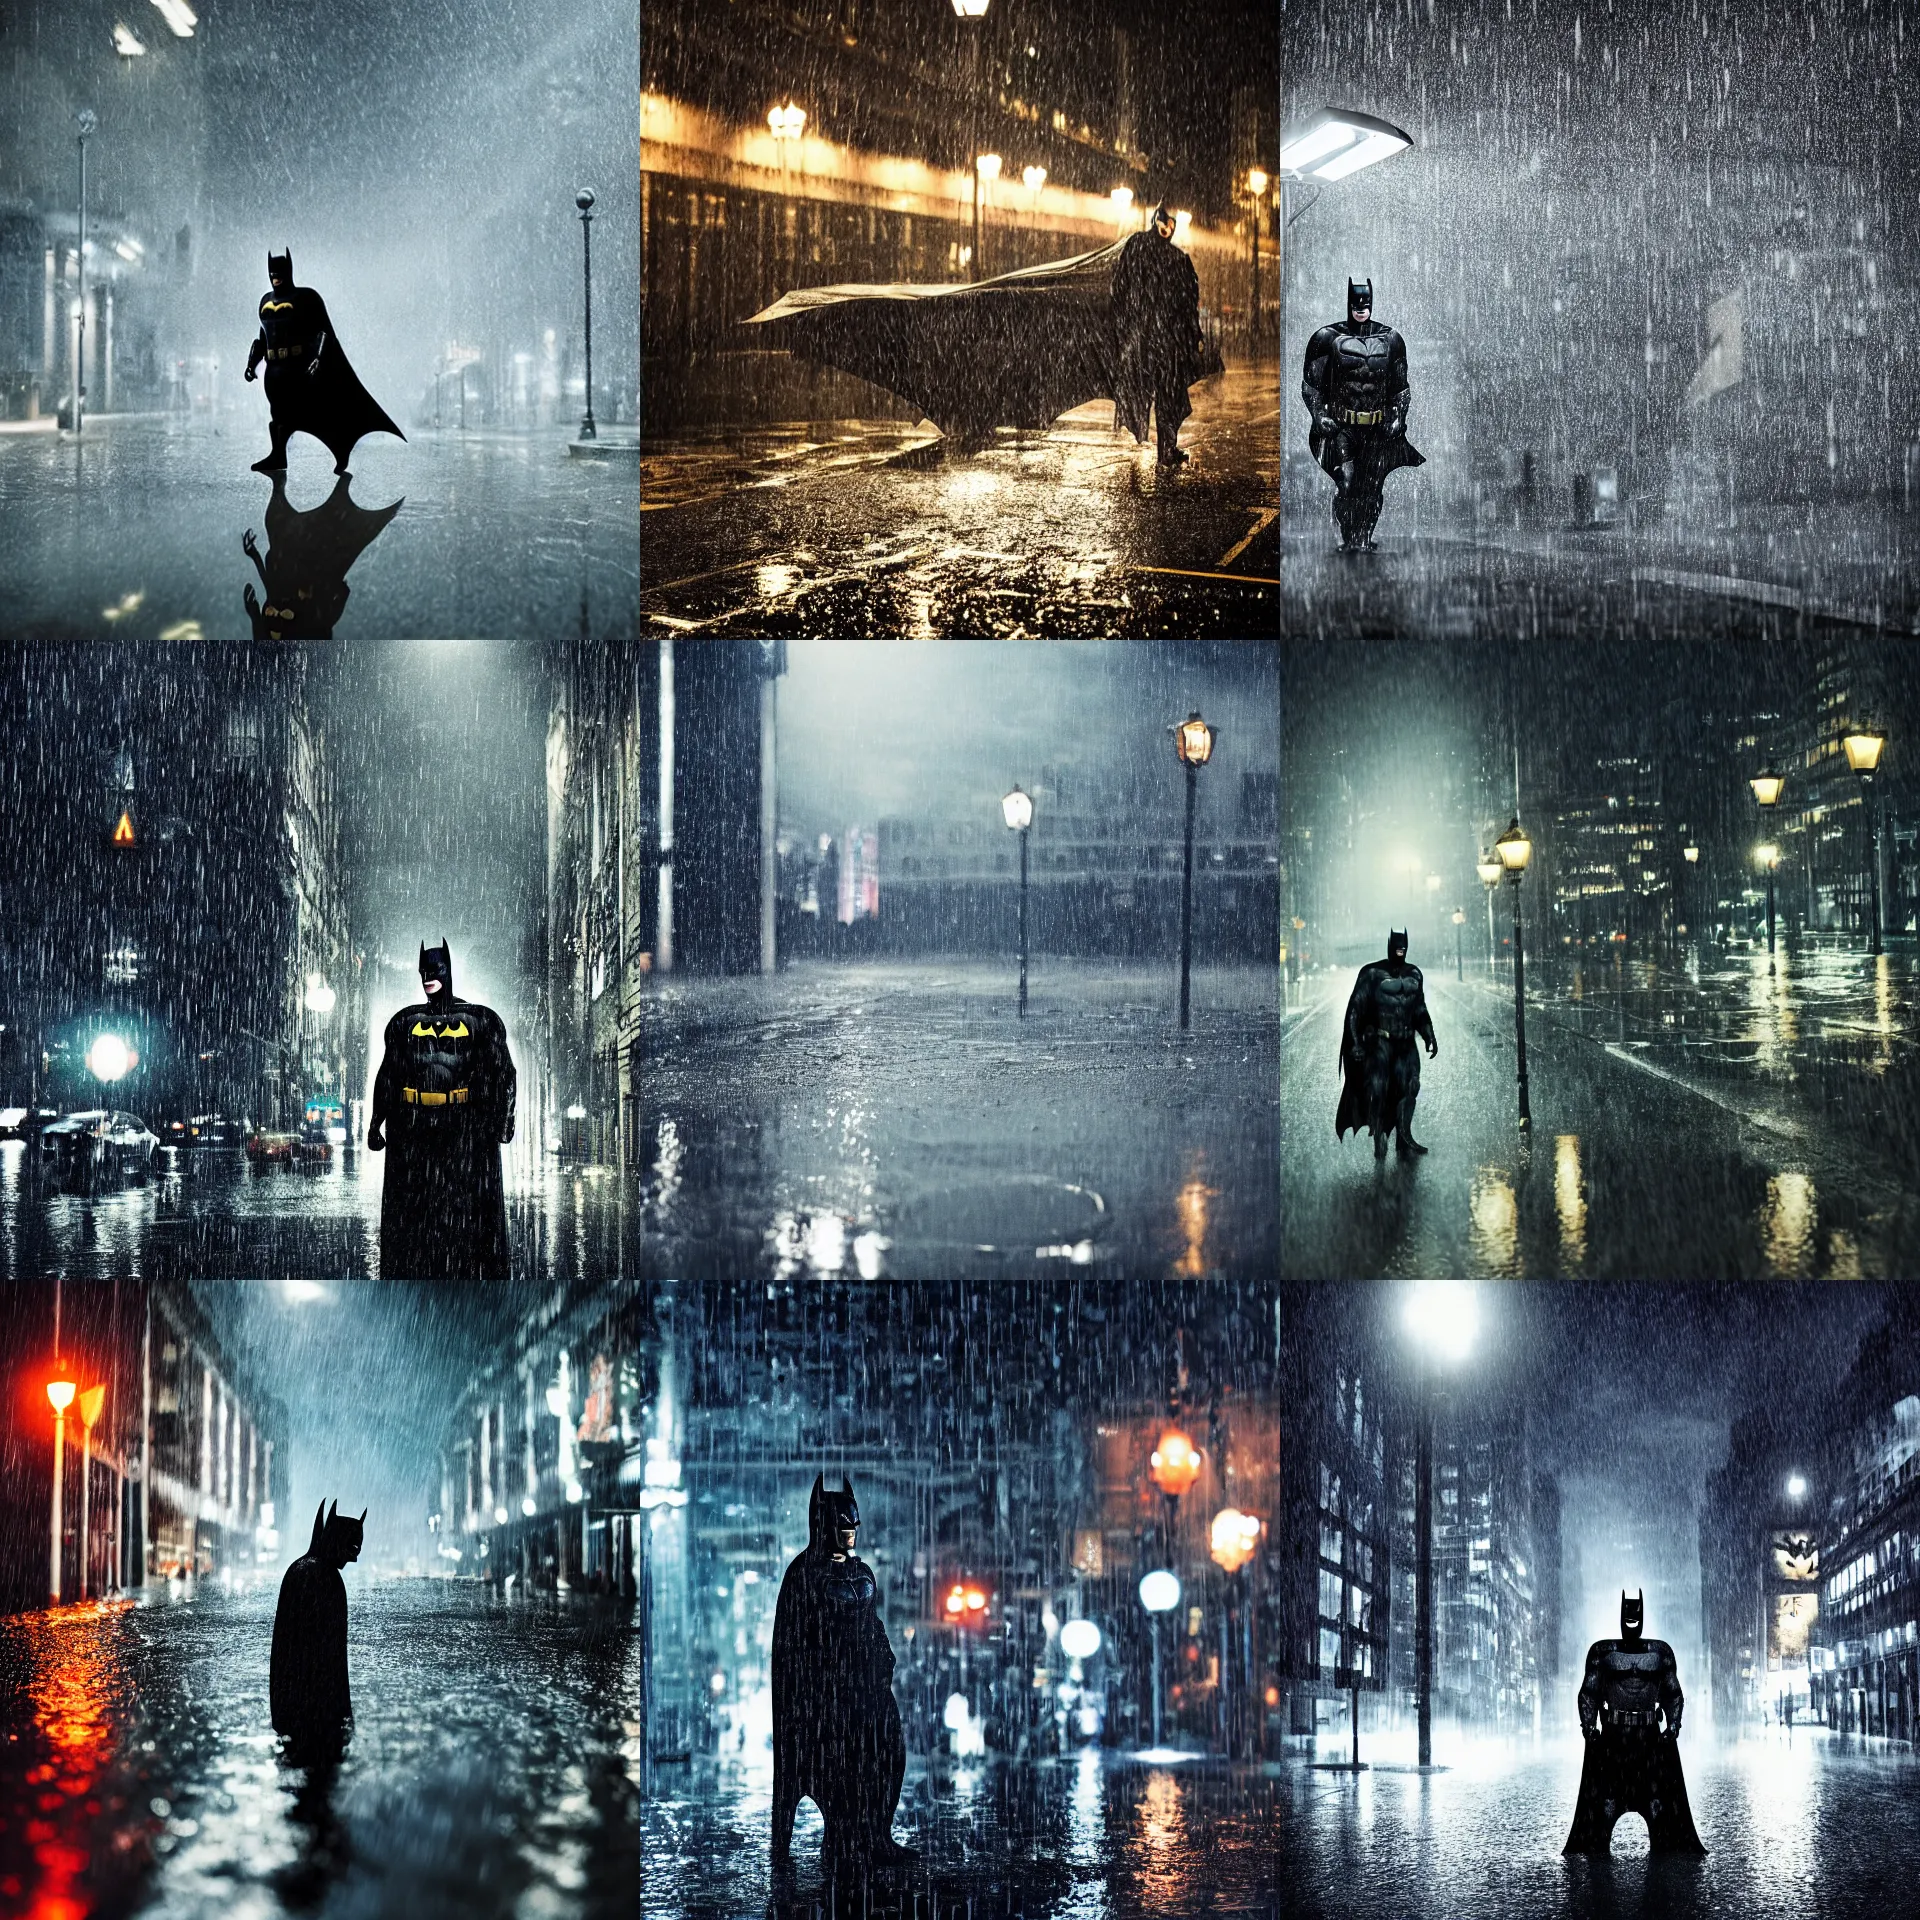 Prompt: Film still of Batman under the rain, puddles of water reflecting street lamp lighting, dramatic scene, cinematic scene, ambient lighting, focus, UHD